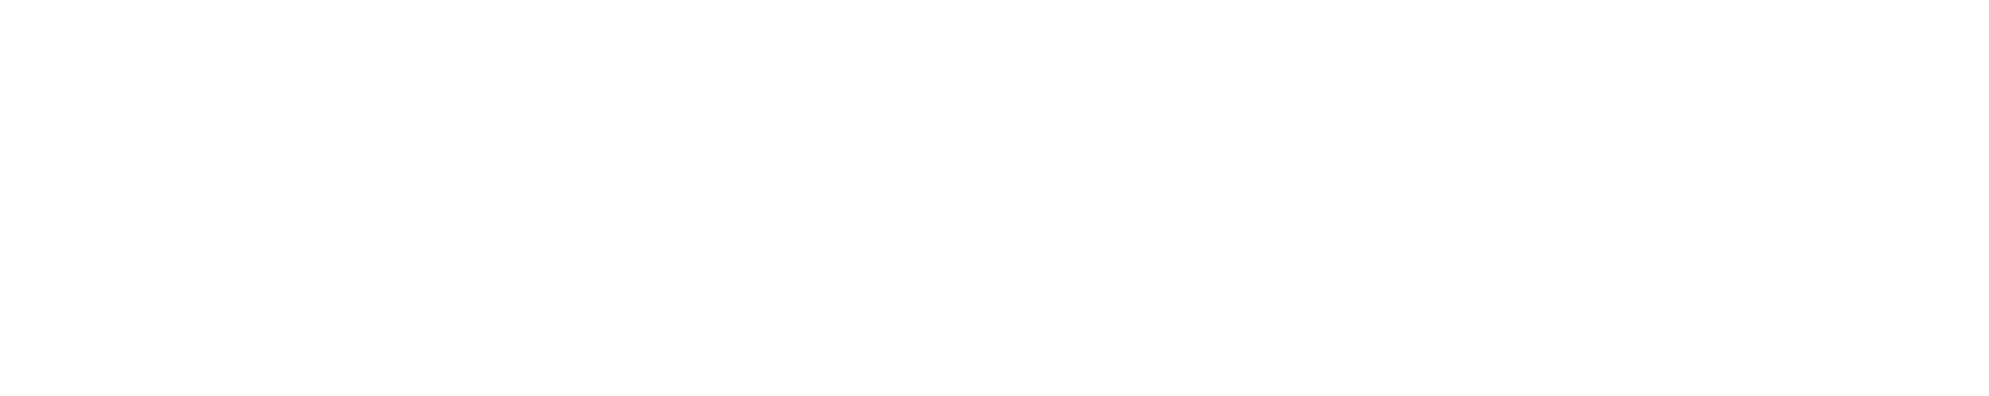 Logo Frank De Neve